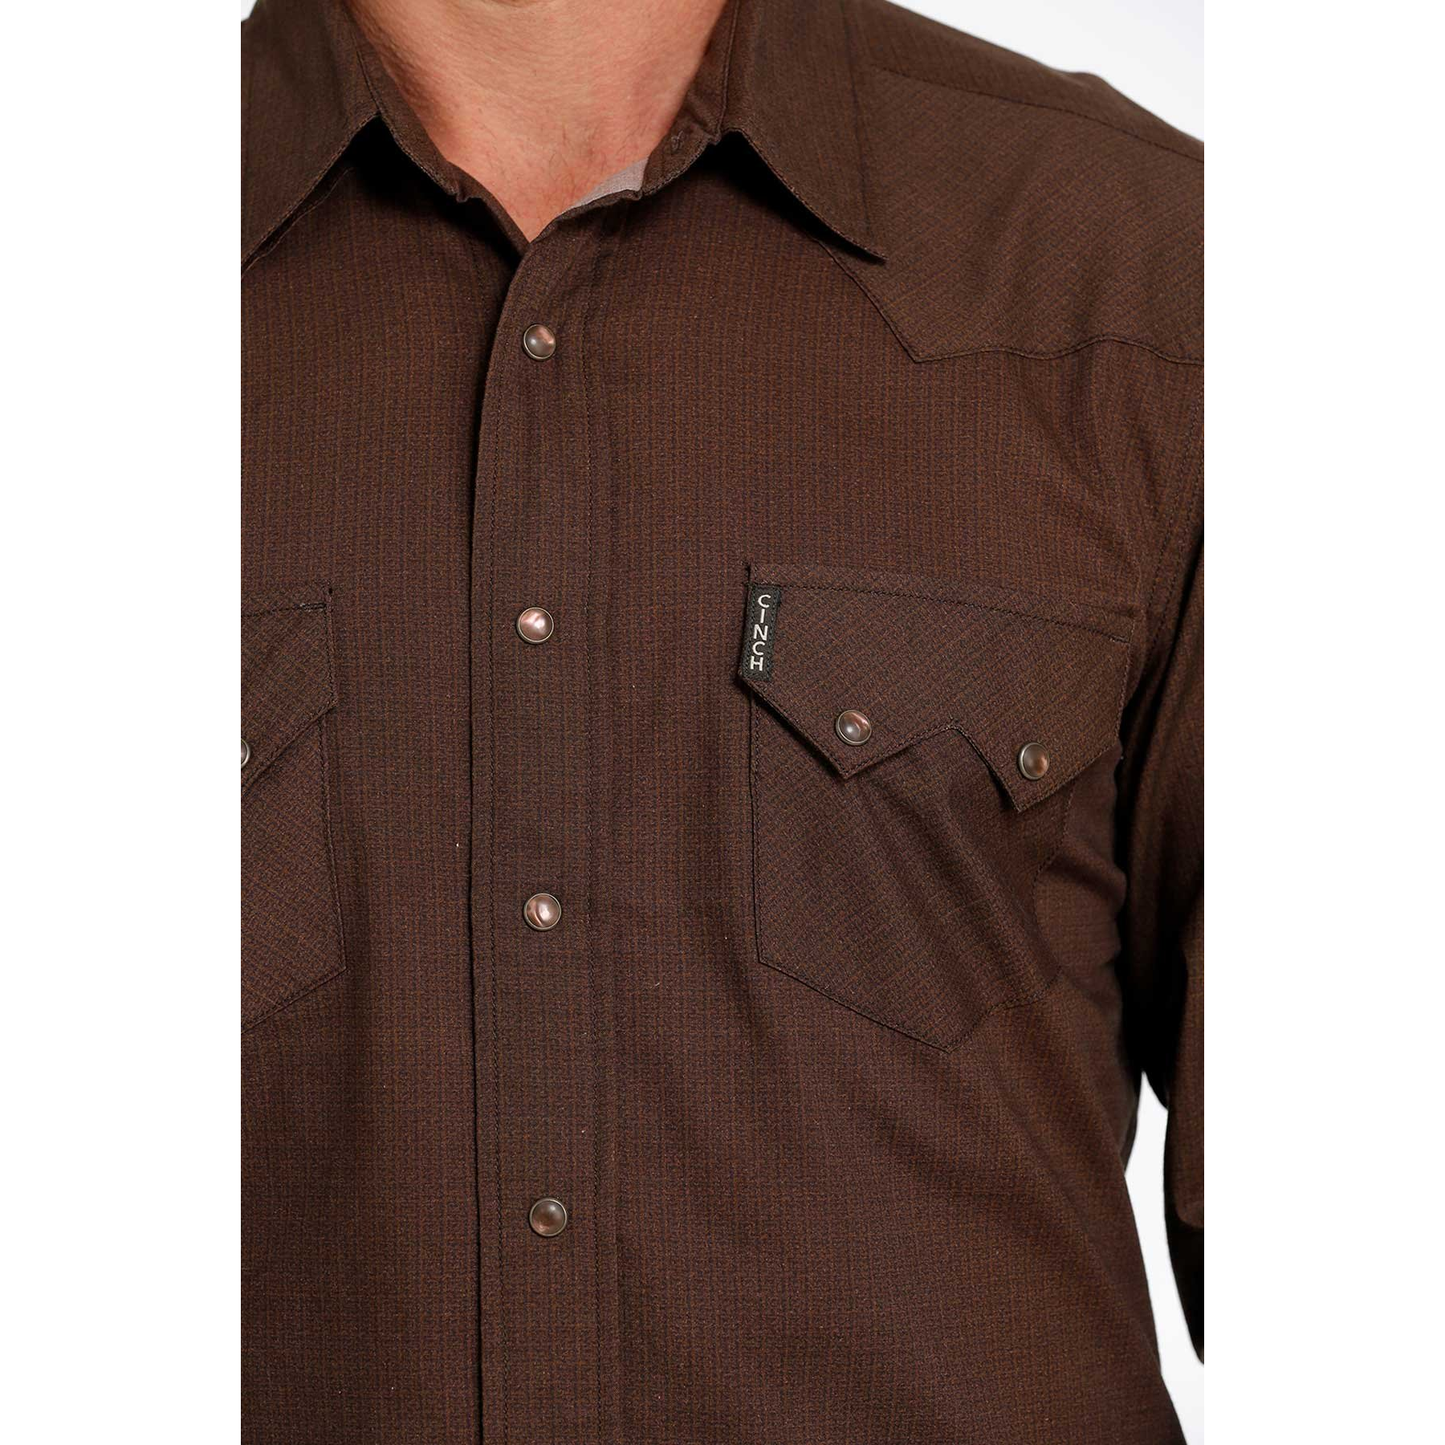 Cinch® Men's Weave Patterned Brown Snap Button Shirt MTW1301061